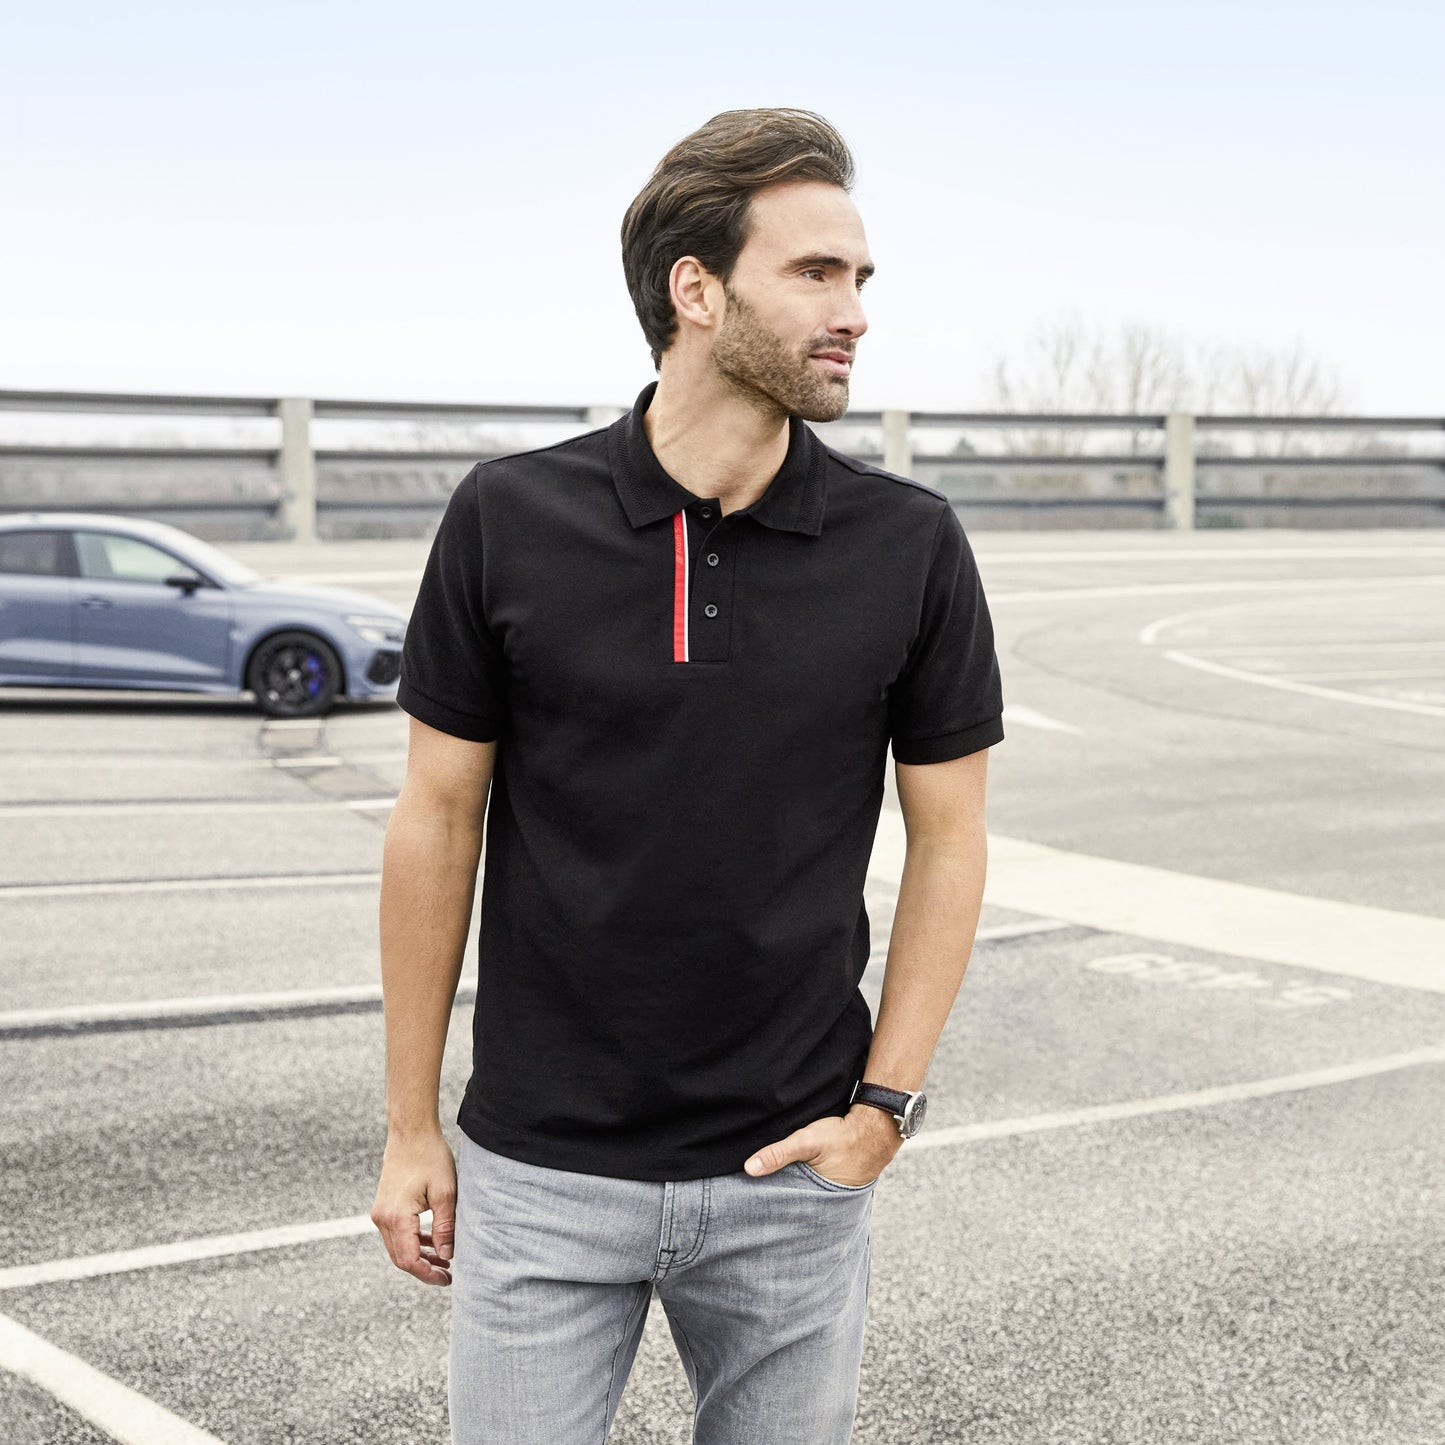 Audi Sport Polo shirt, mens, black